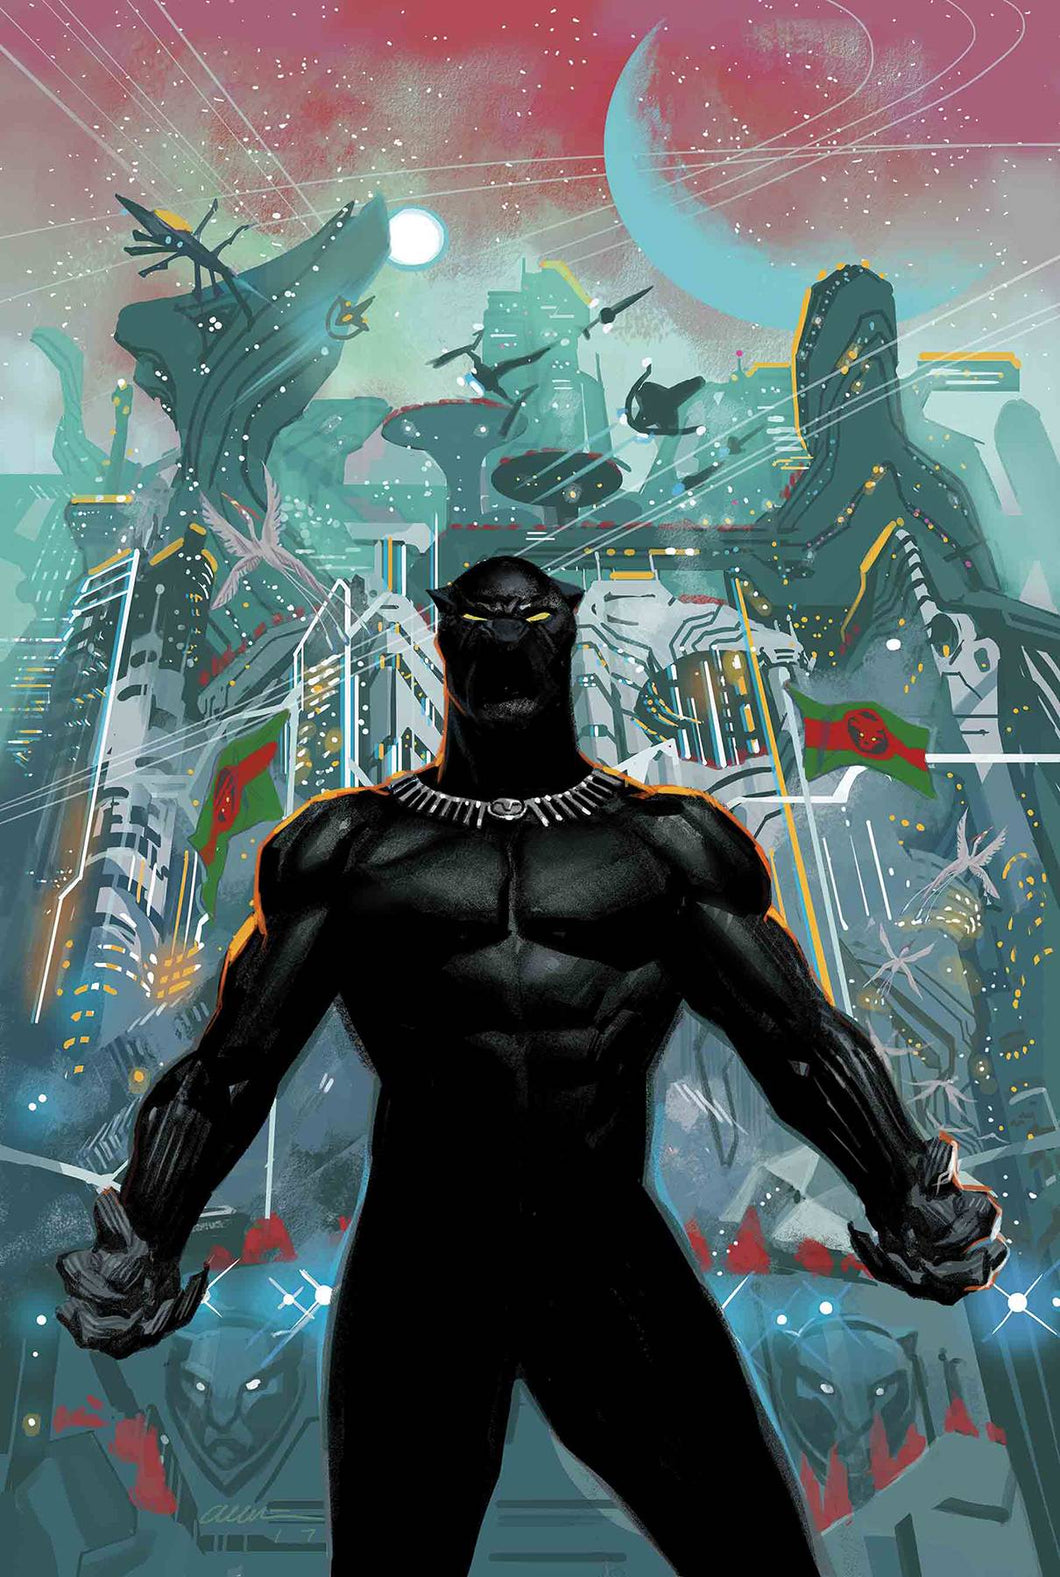 Black Panther #1 Ratio & Retail Variants